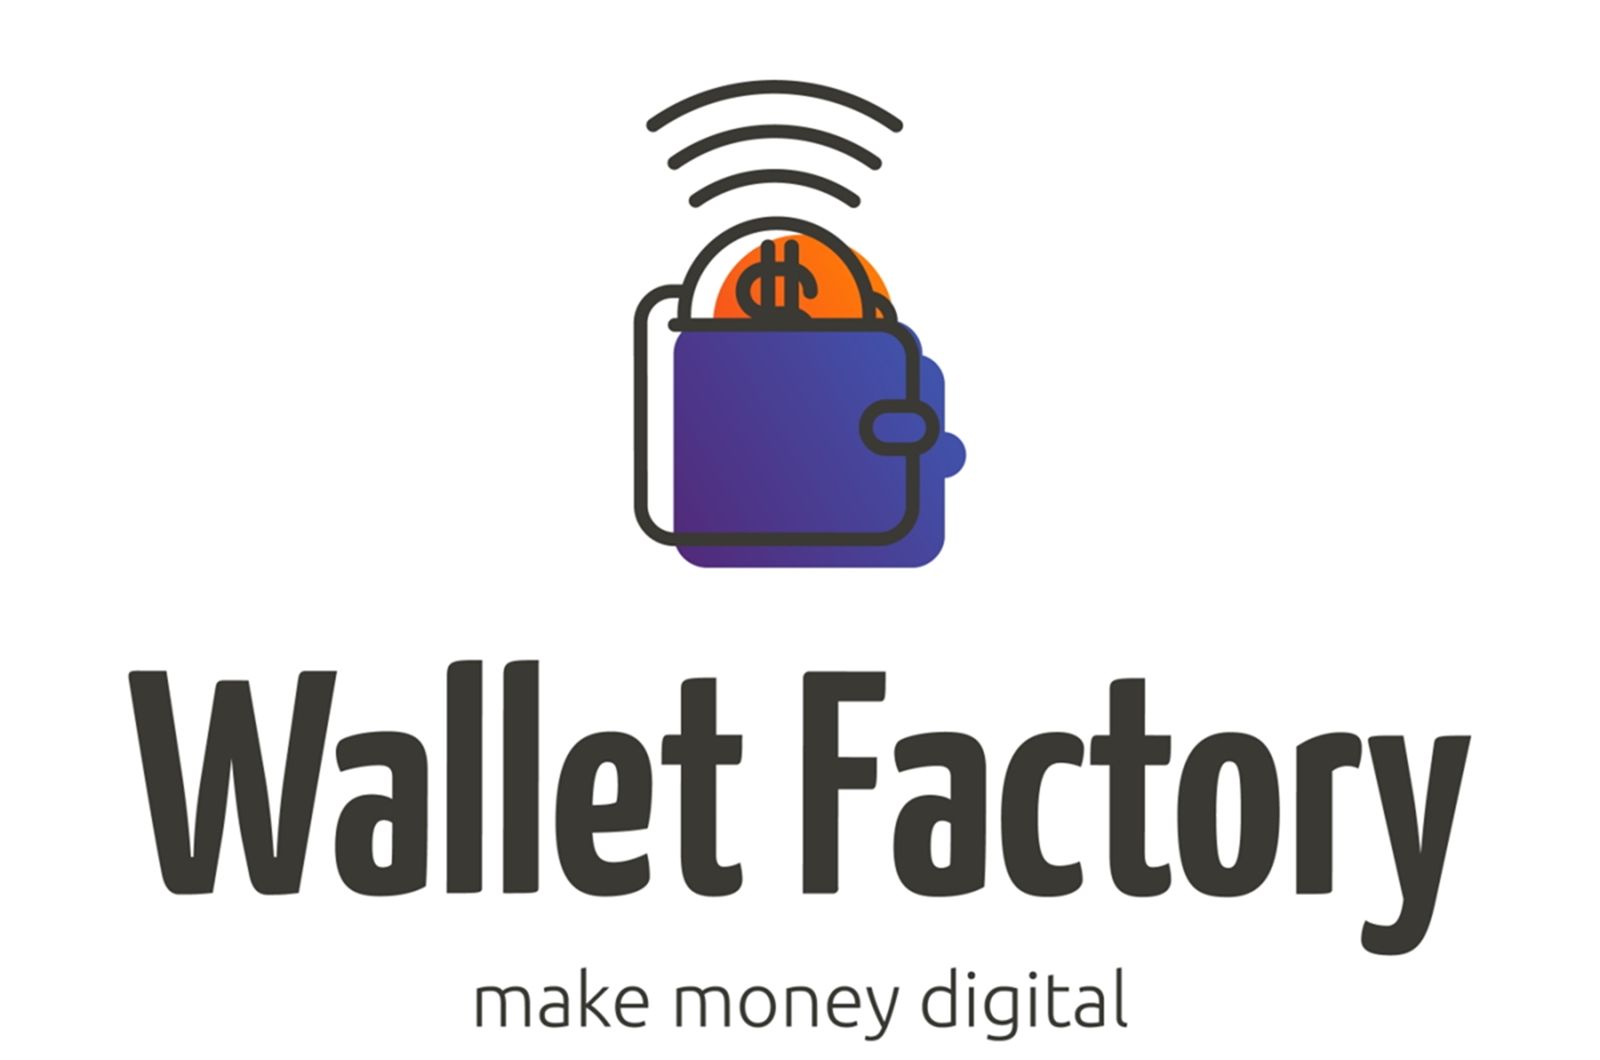 Wallet Factory Logo